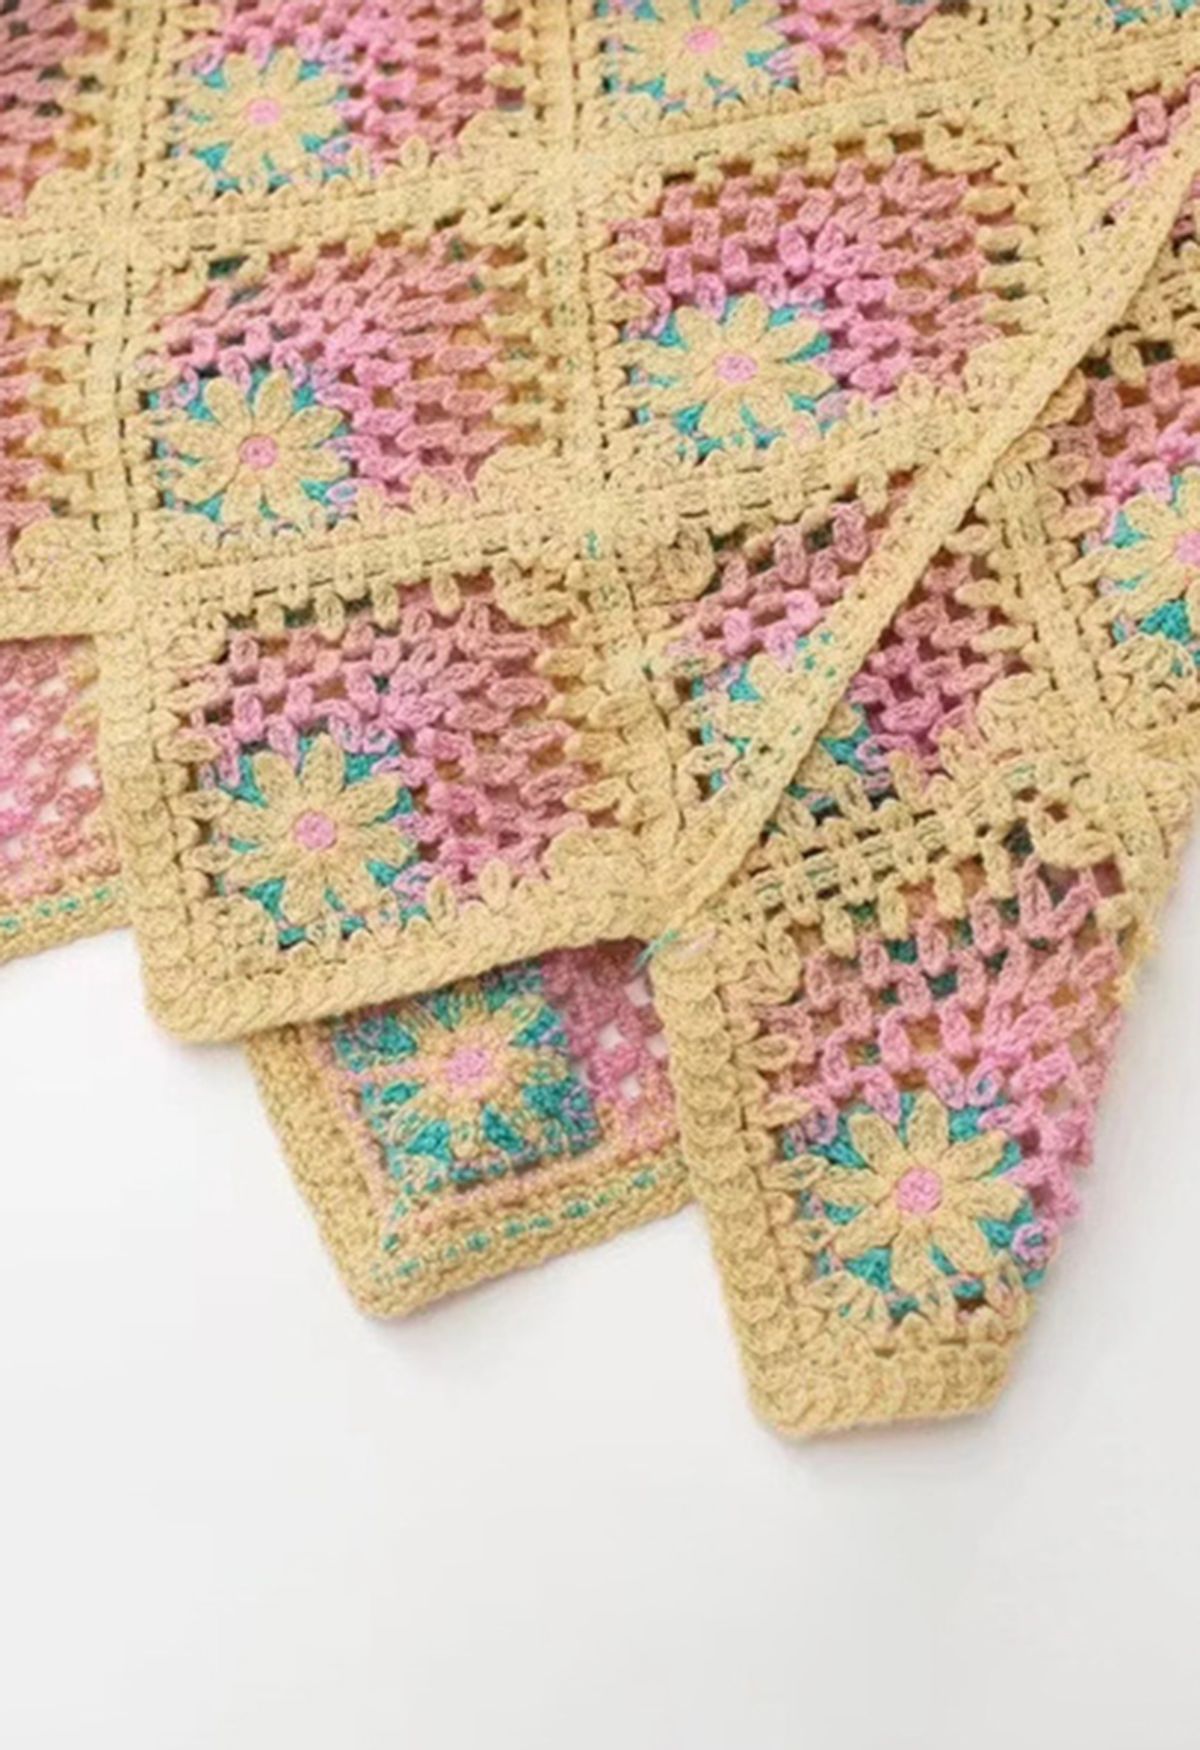 Boho Ethnic Floral Crochet Dress